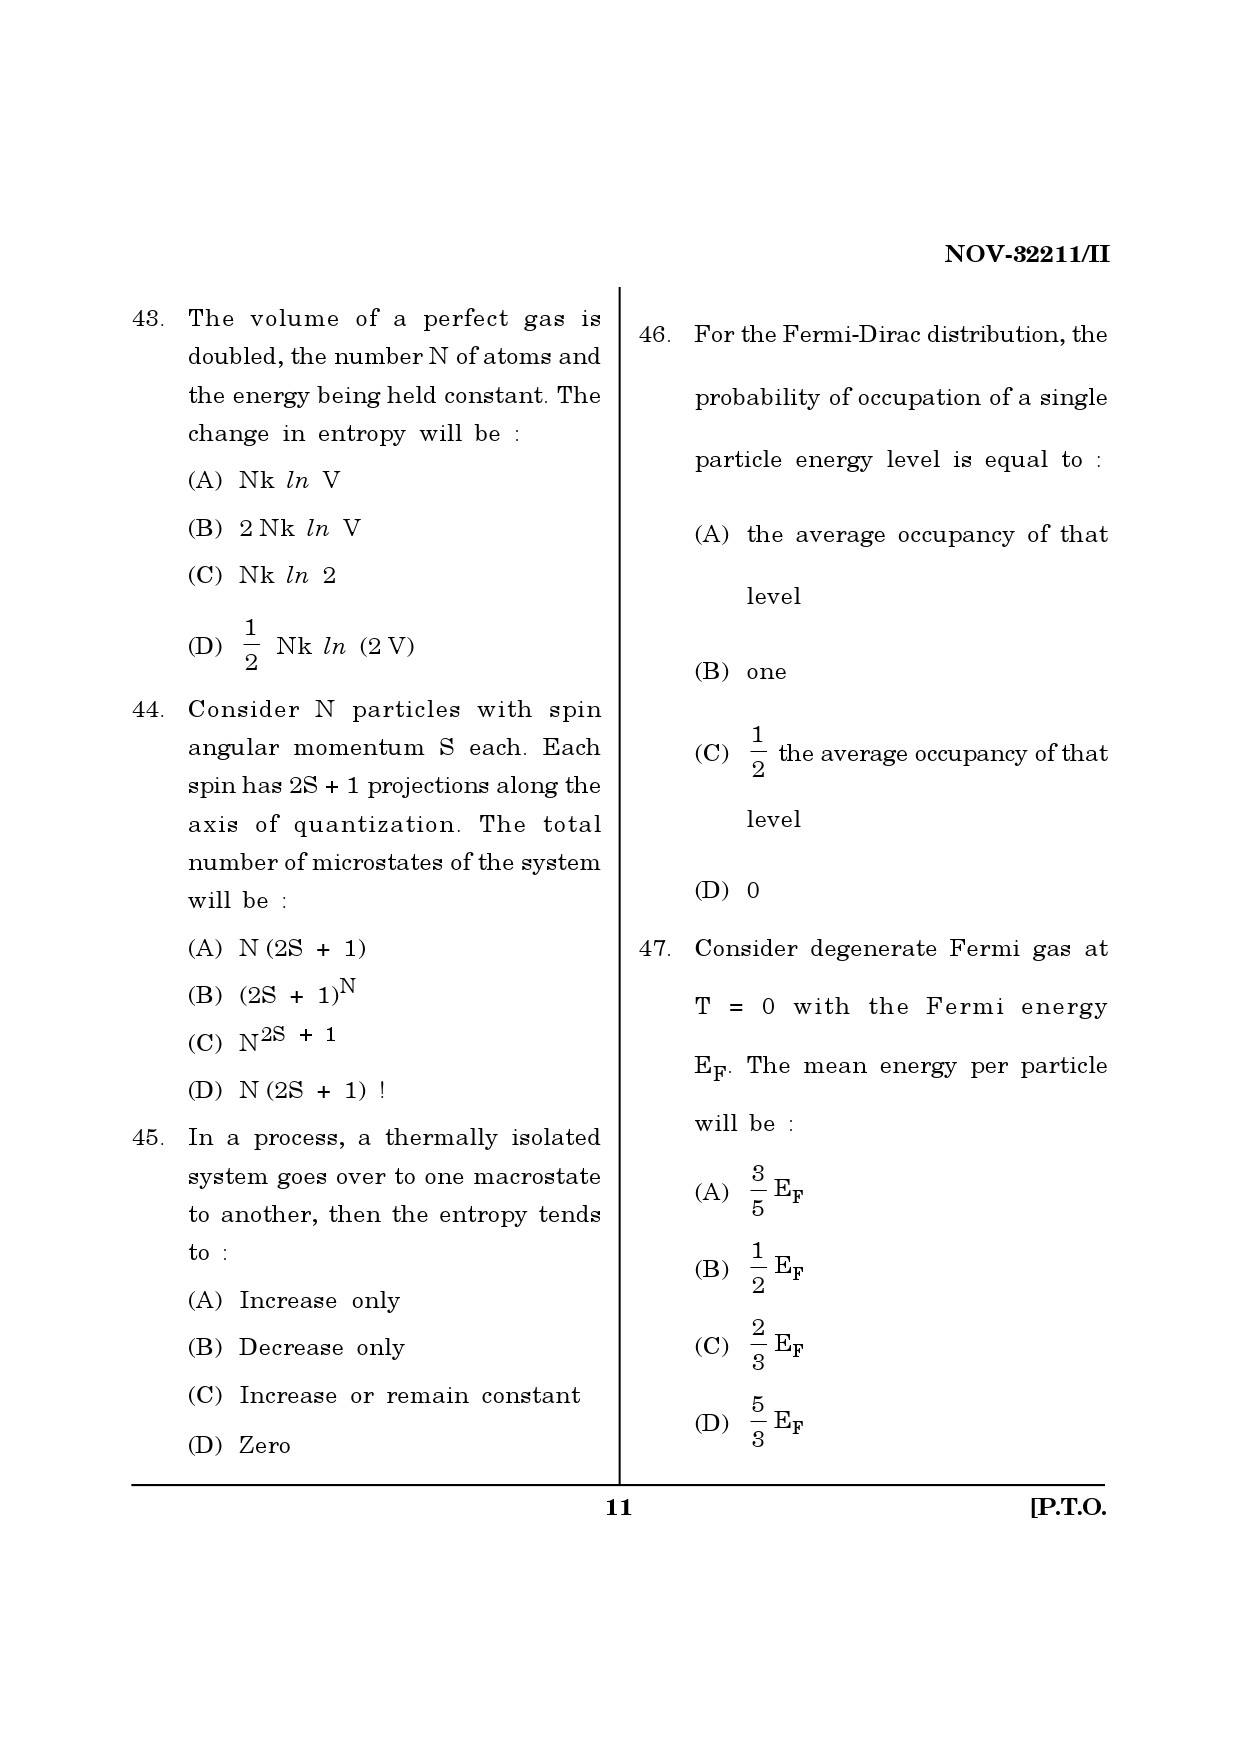 Maharashtra SET Physics Question Paper II November 2011 11